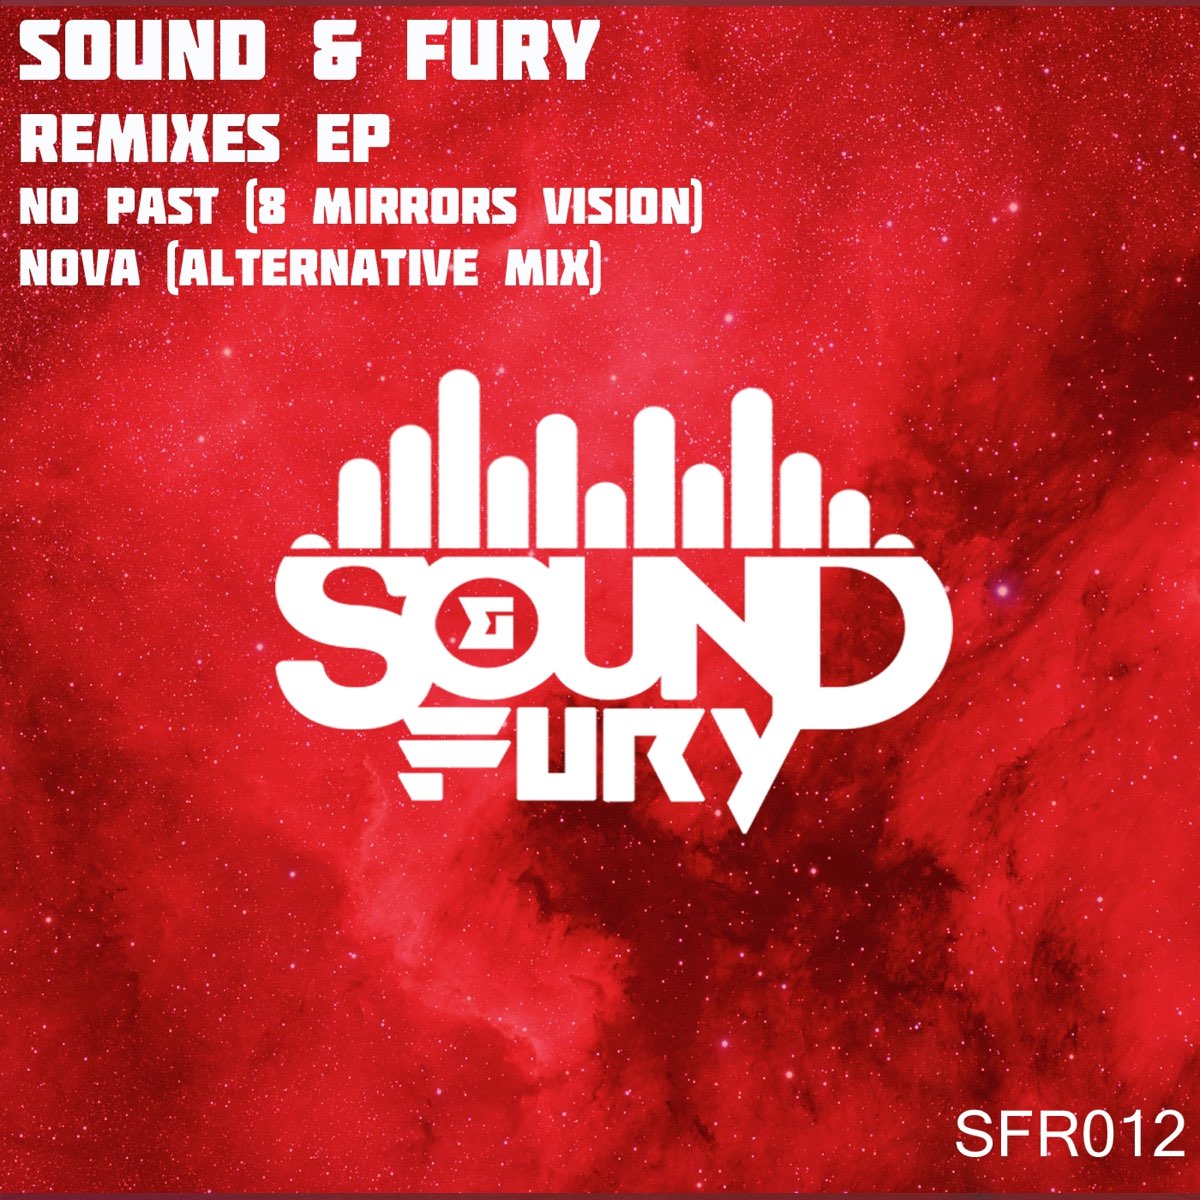 Фурия ремикс. The Sound and the Fury. Nova Fury. Sound and Fury Slick. Future Heroes Sound and Fury альбом это.